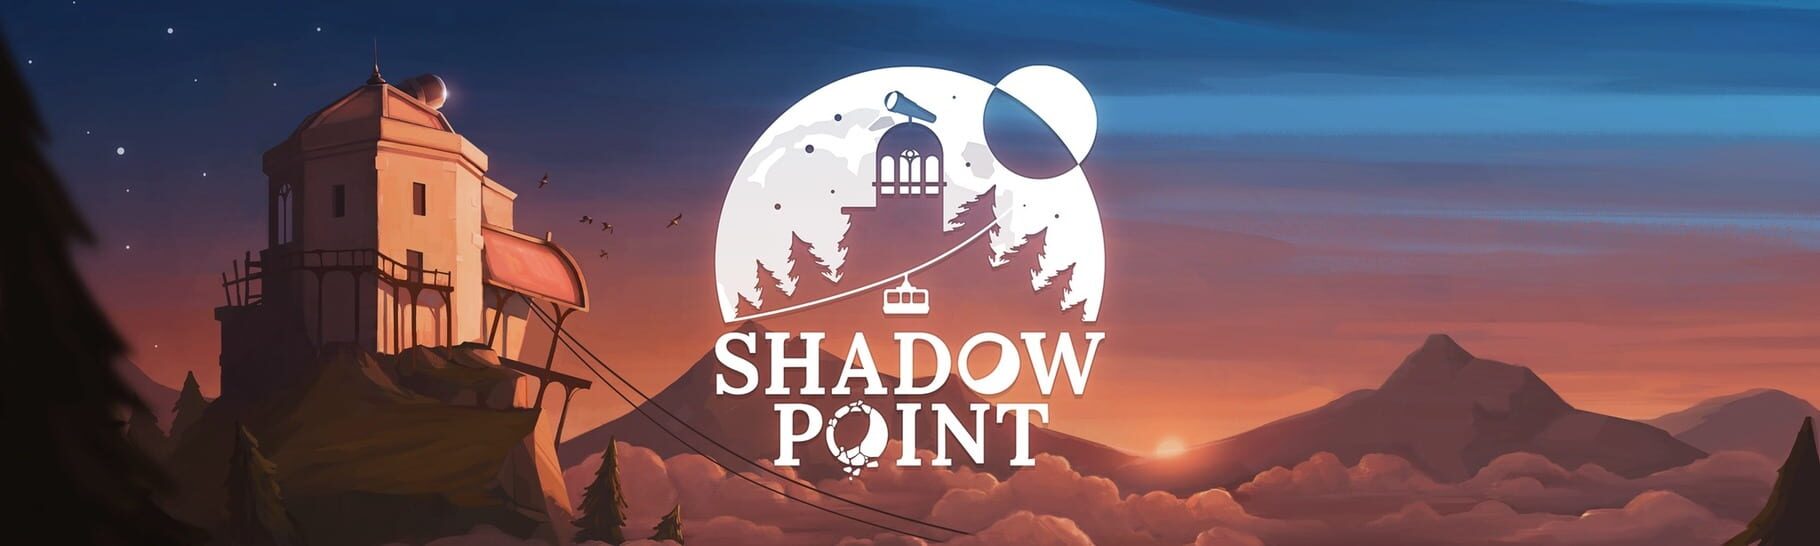 Arte - Shadow Point